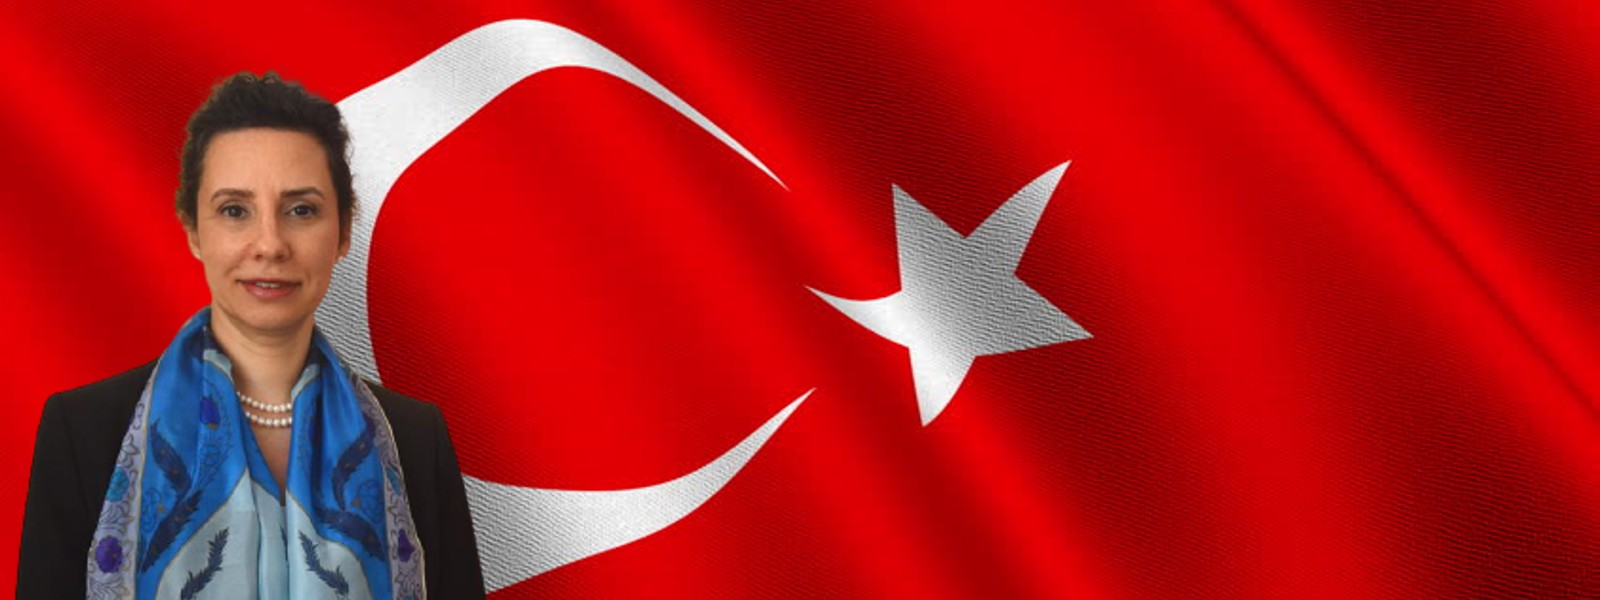 Turkey marks 98th Republic Day & seeks to enhance ties with Sri Lanka